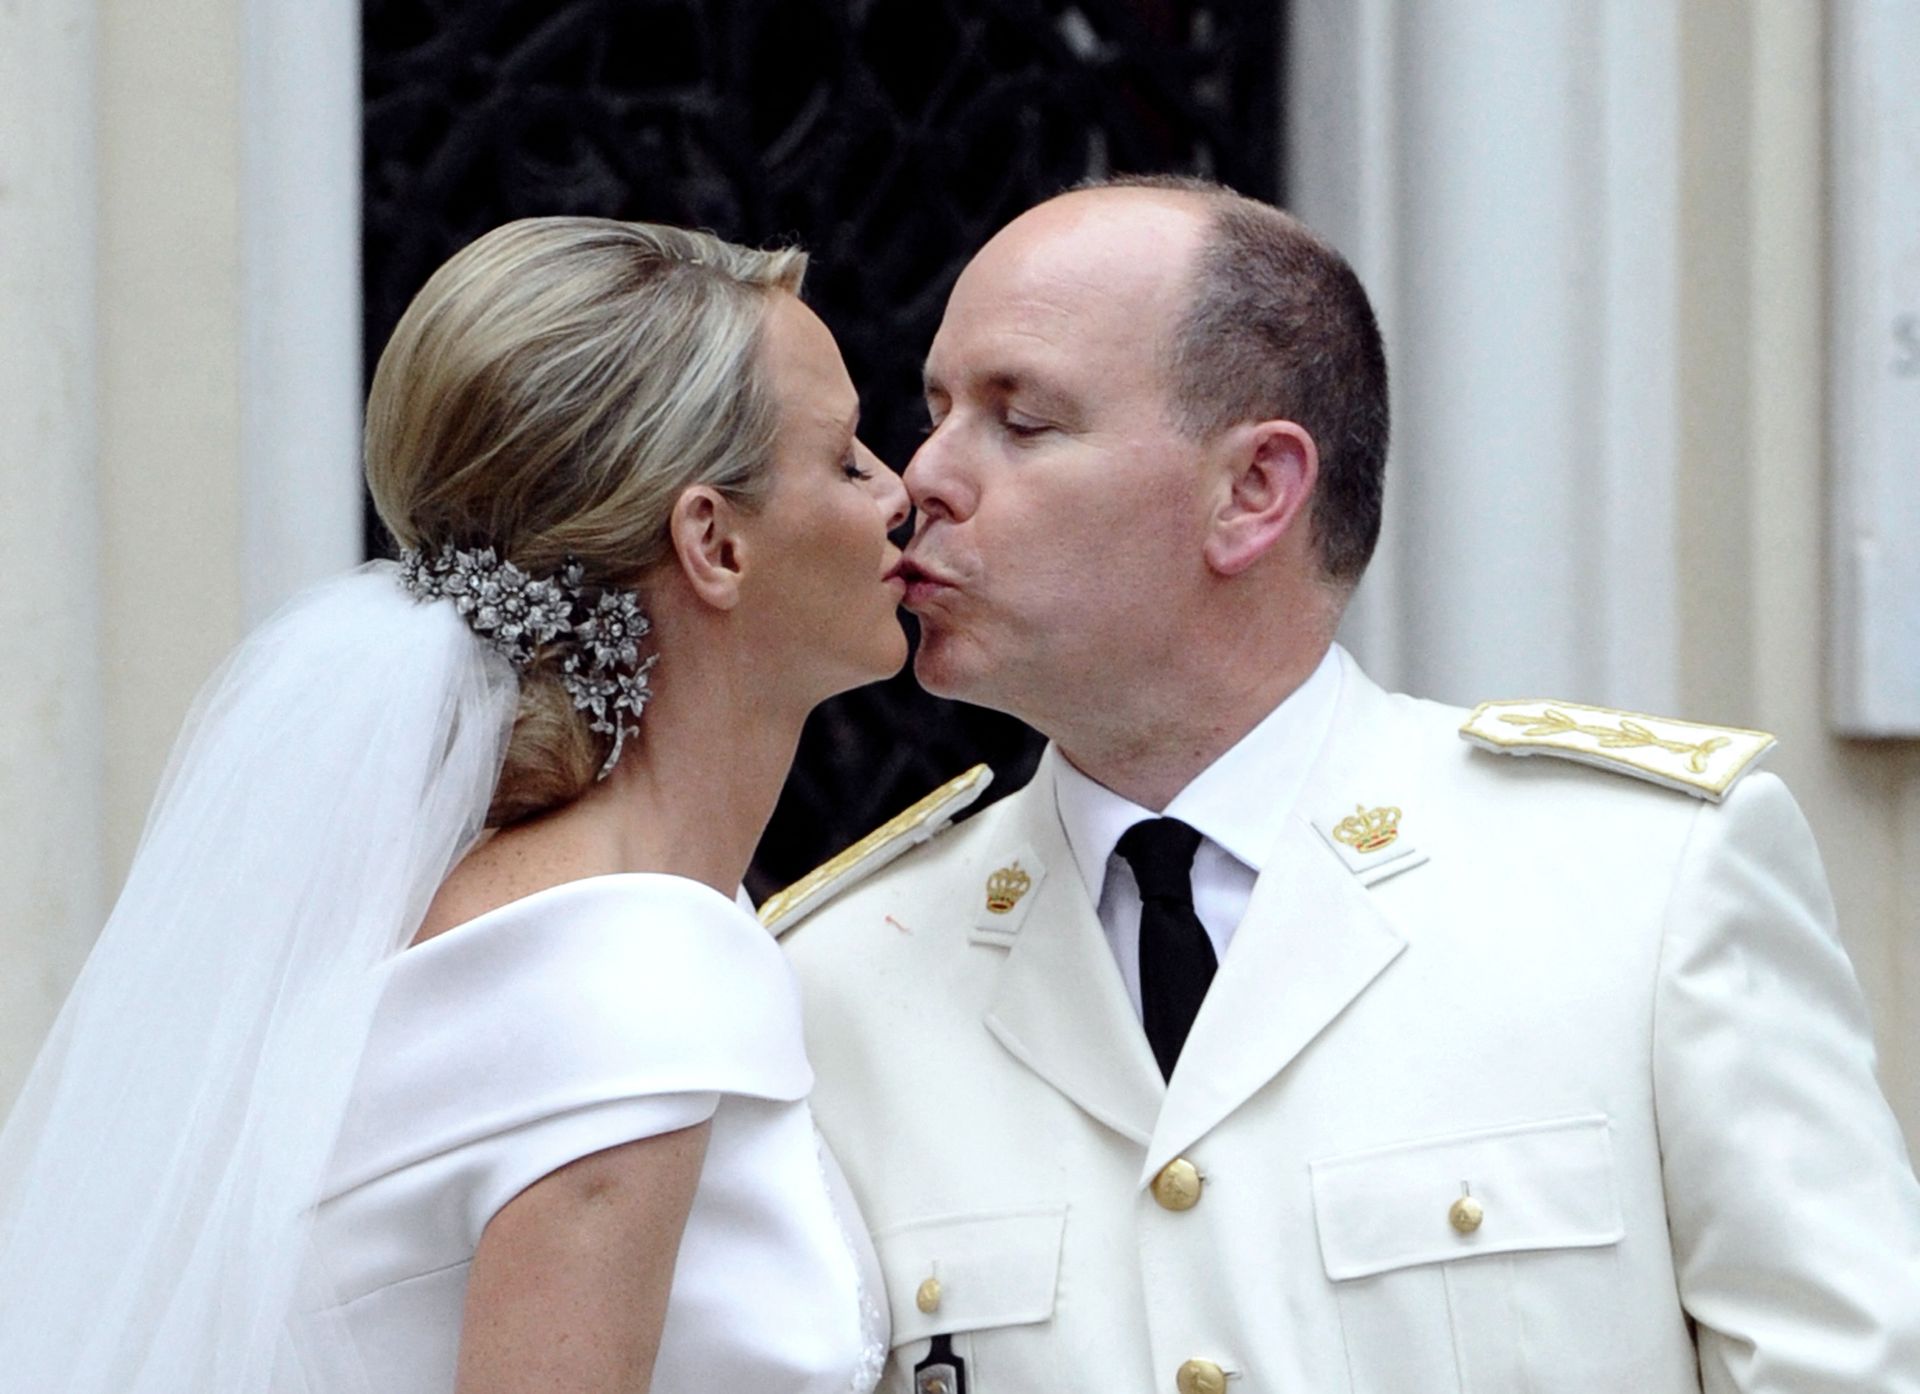 Prins Albert kust prinses Charlène op hun huwelijksdag in 2011